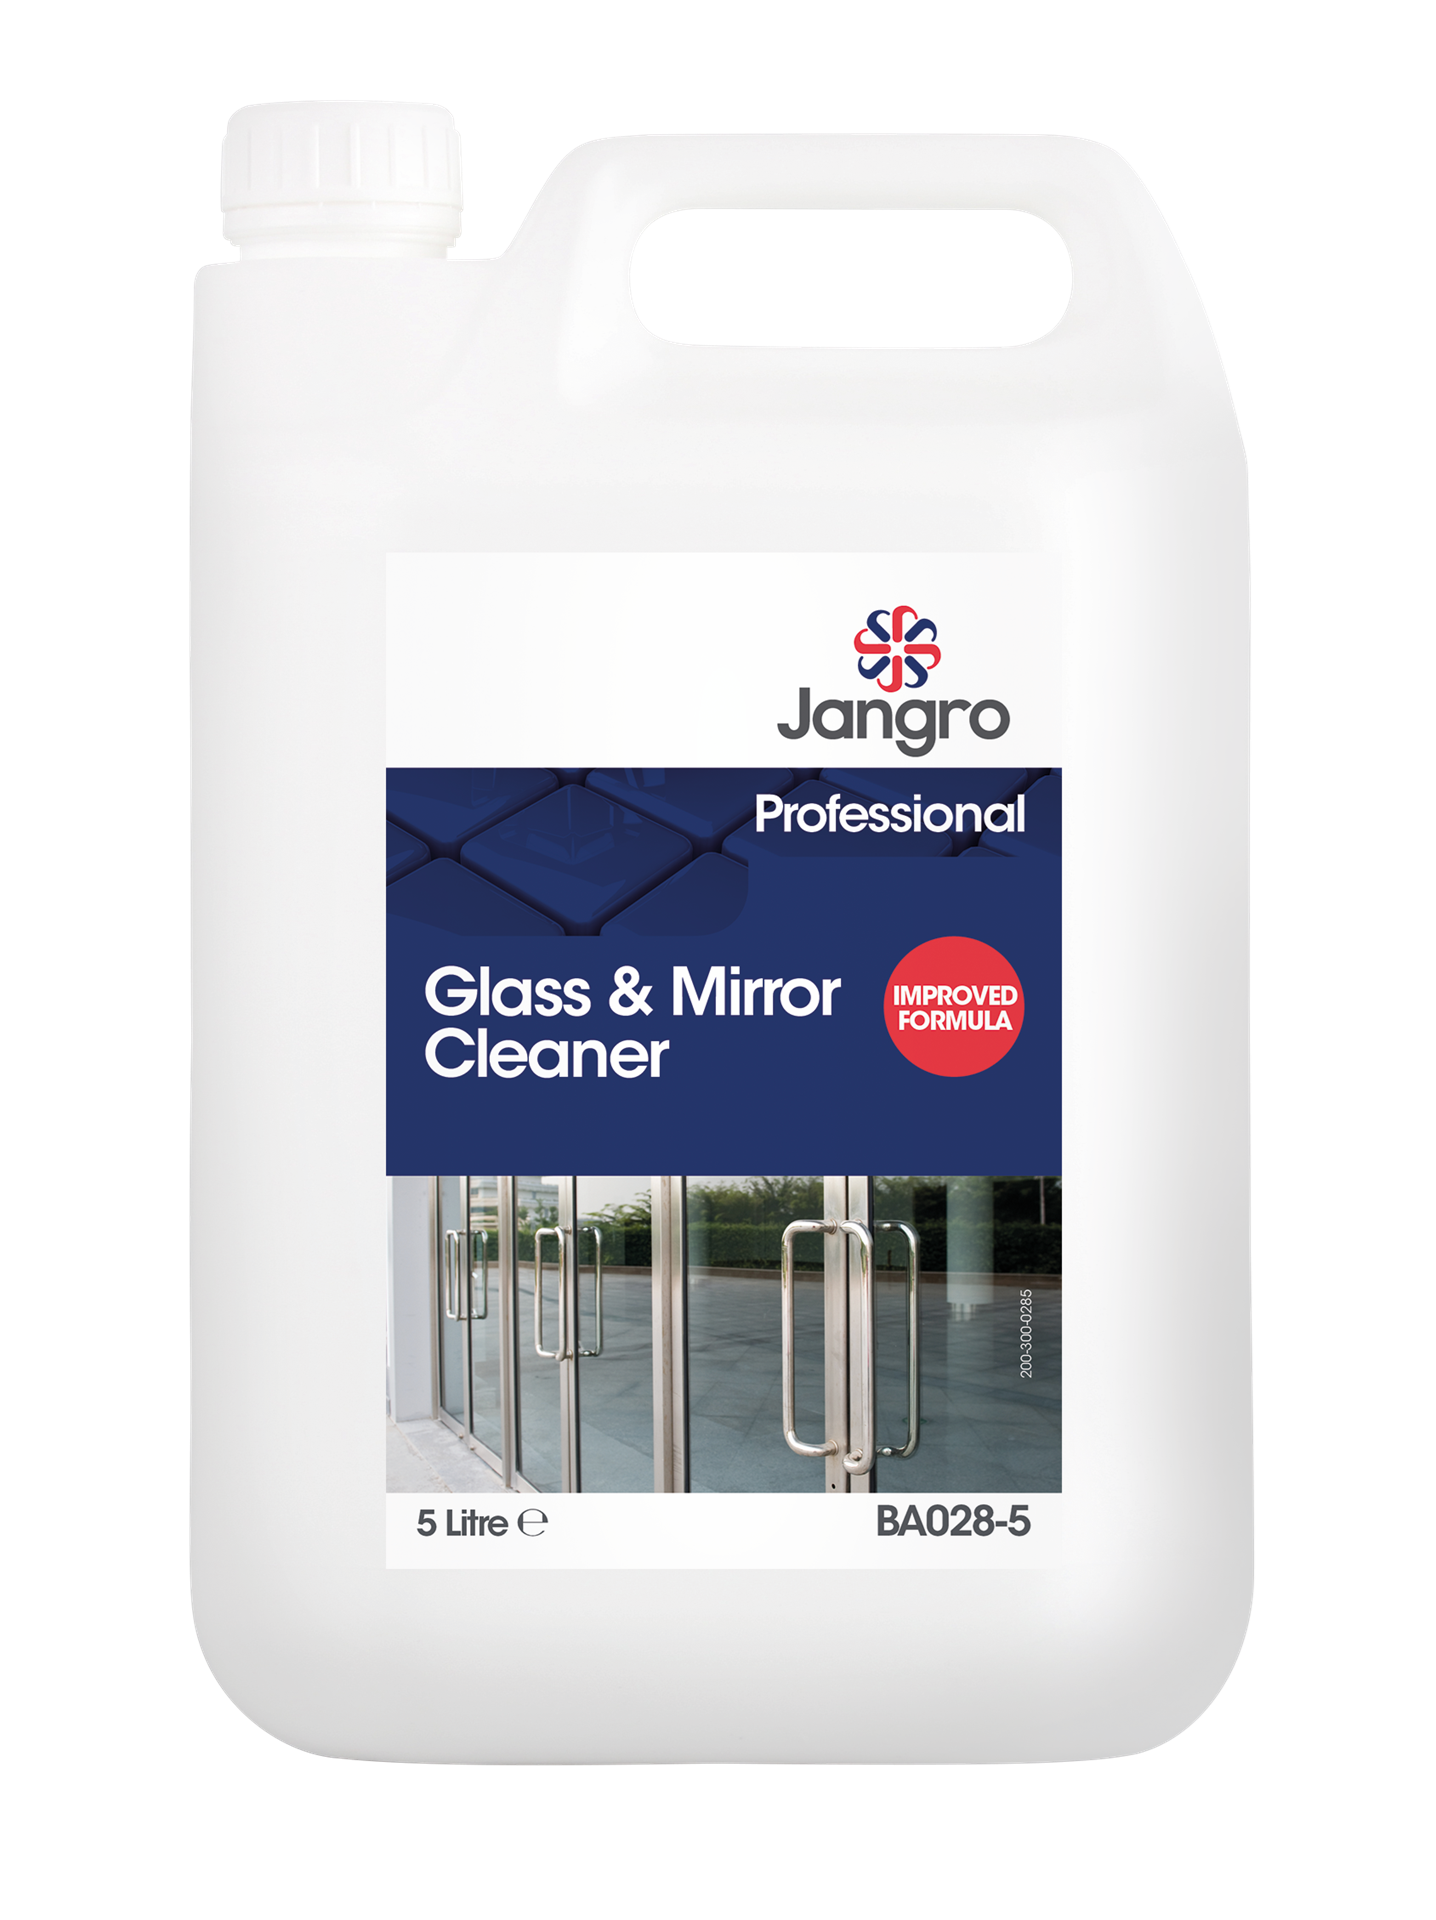 Jangro Professional Glass & Mirror Cleaner, 5 Litre - 800-122-0024 / BA028-5